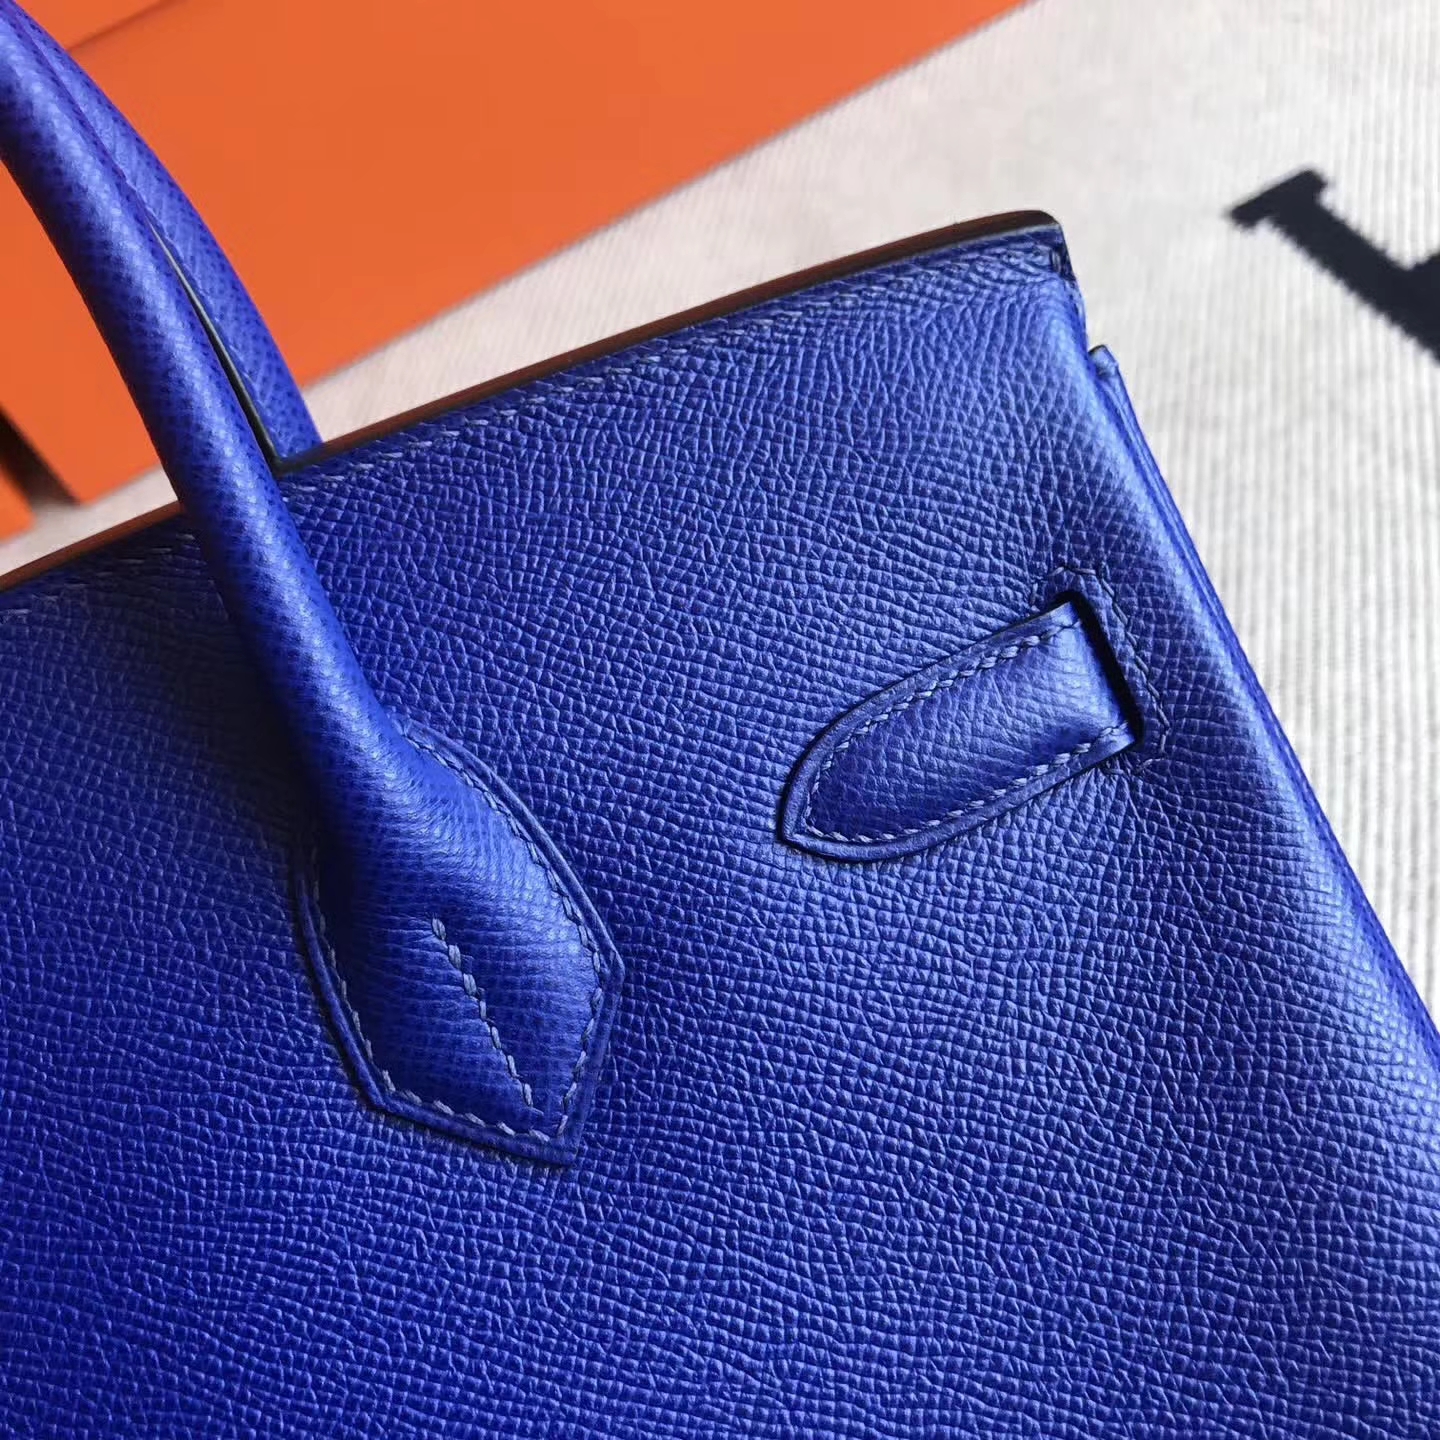 Hot Sale Hermes 7T Blue Electric Epsom Leather Birkin30cm Handbag